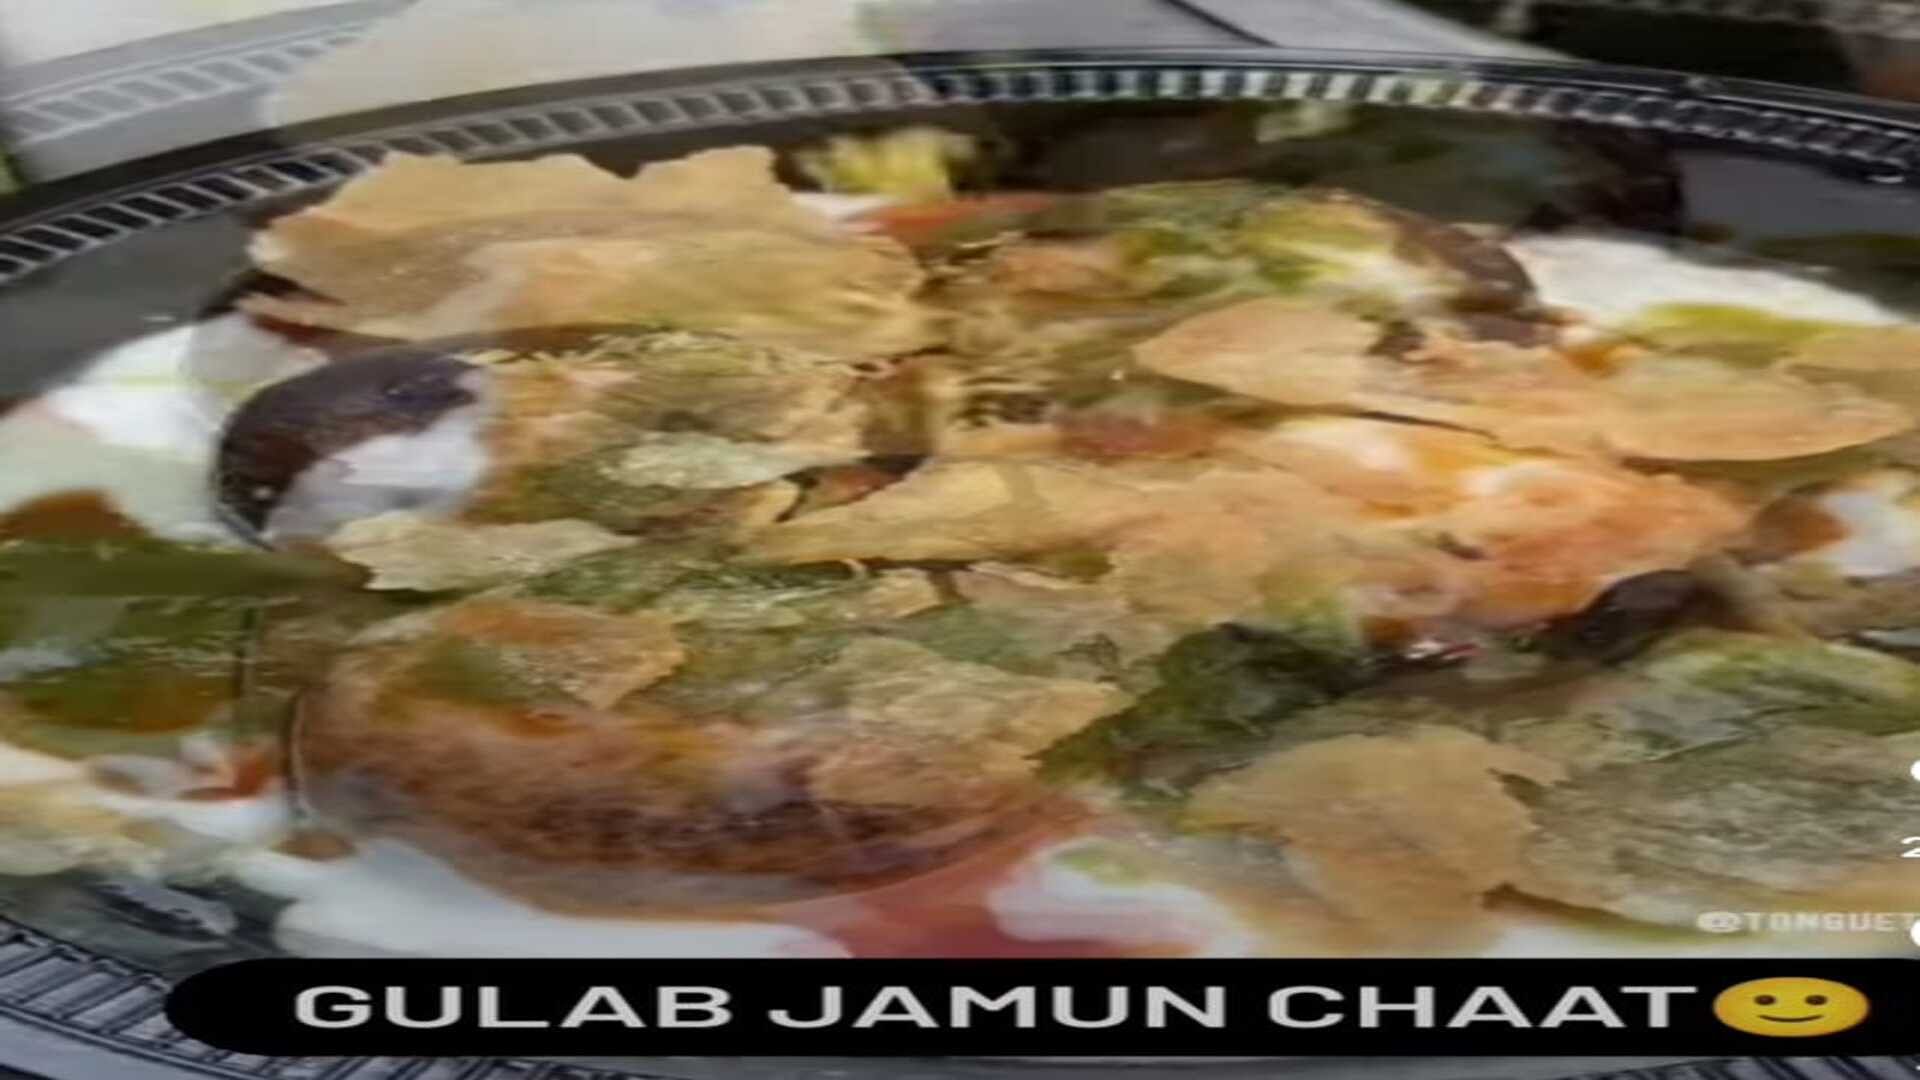 Weird gulab jamun chat recipe viral on social media